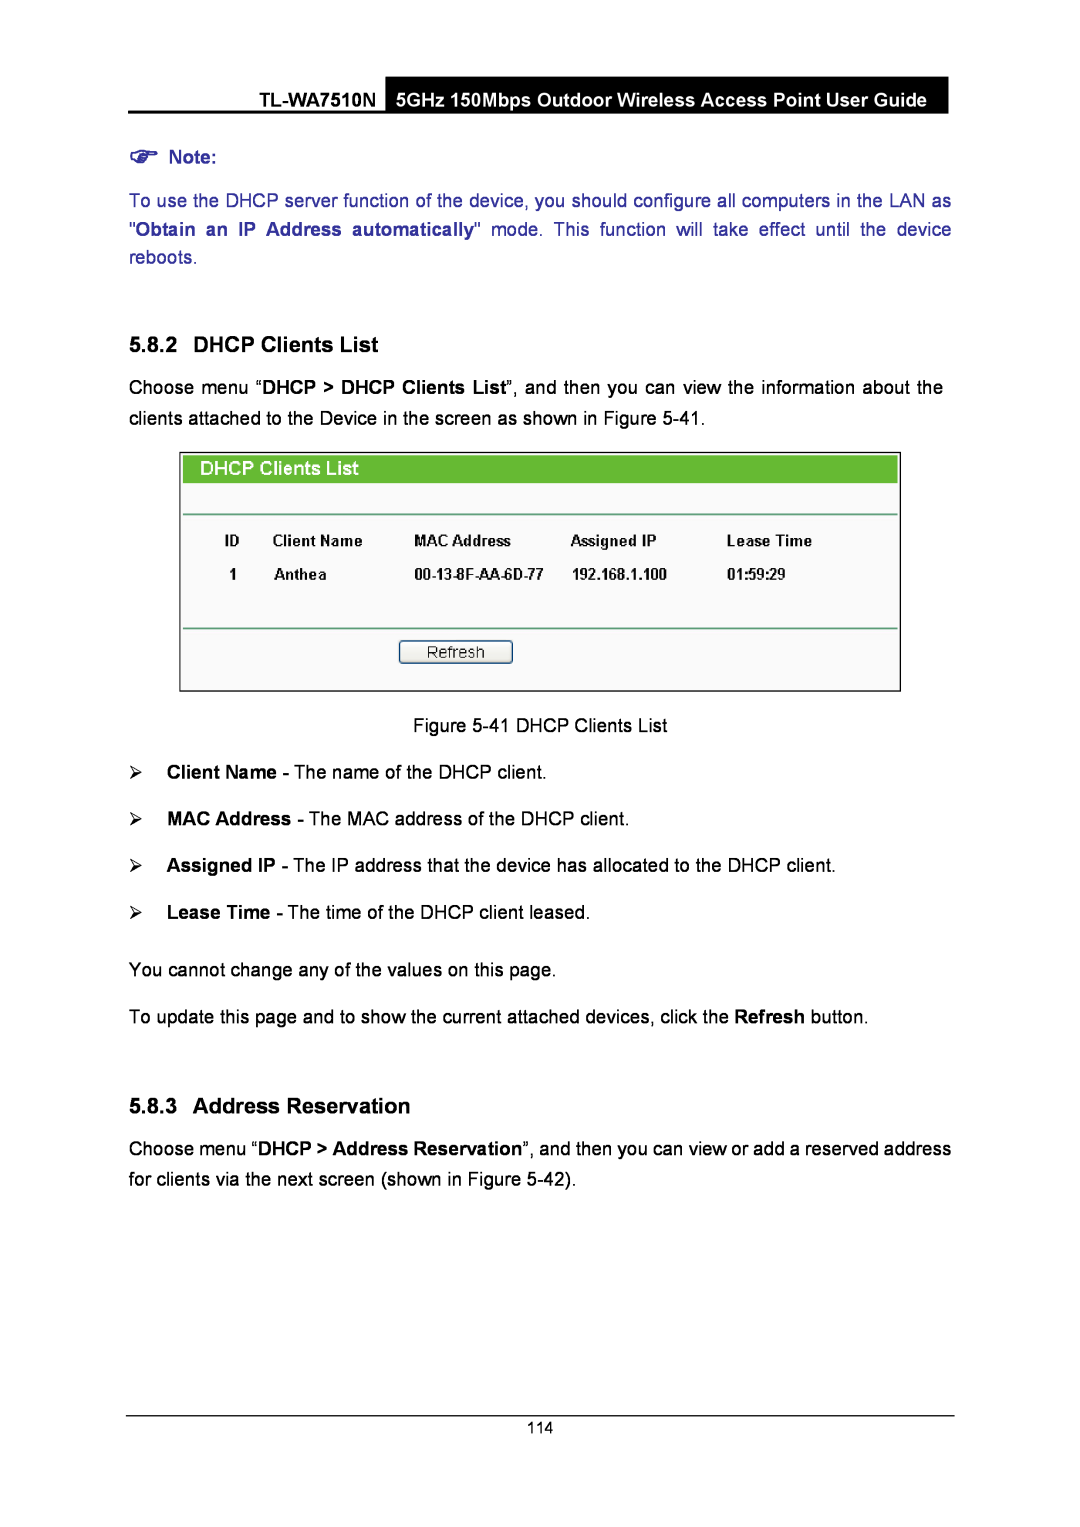 TP-Link TL-WA7510N manual DHCP Clients List, Address Reservation 